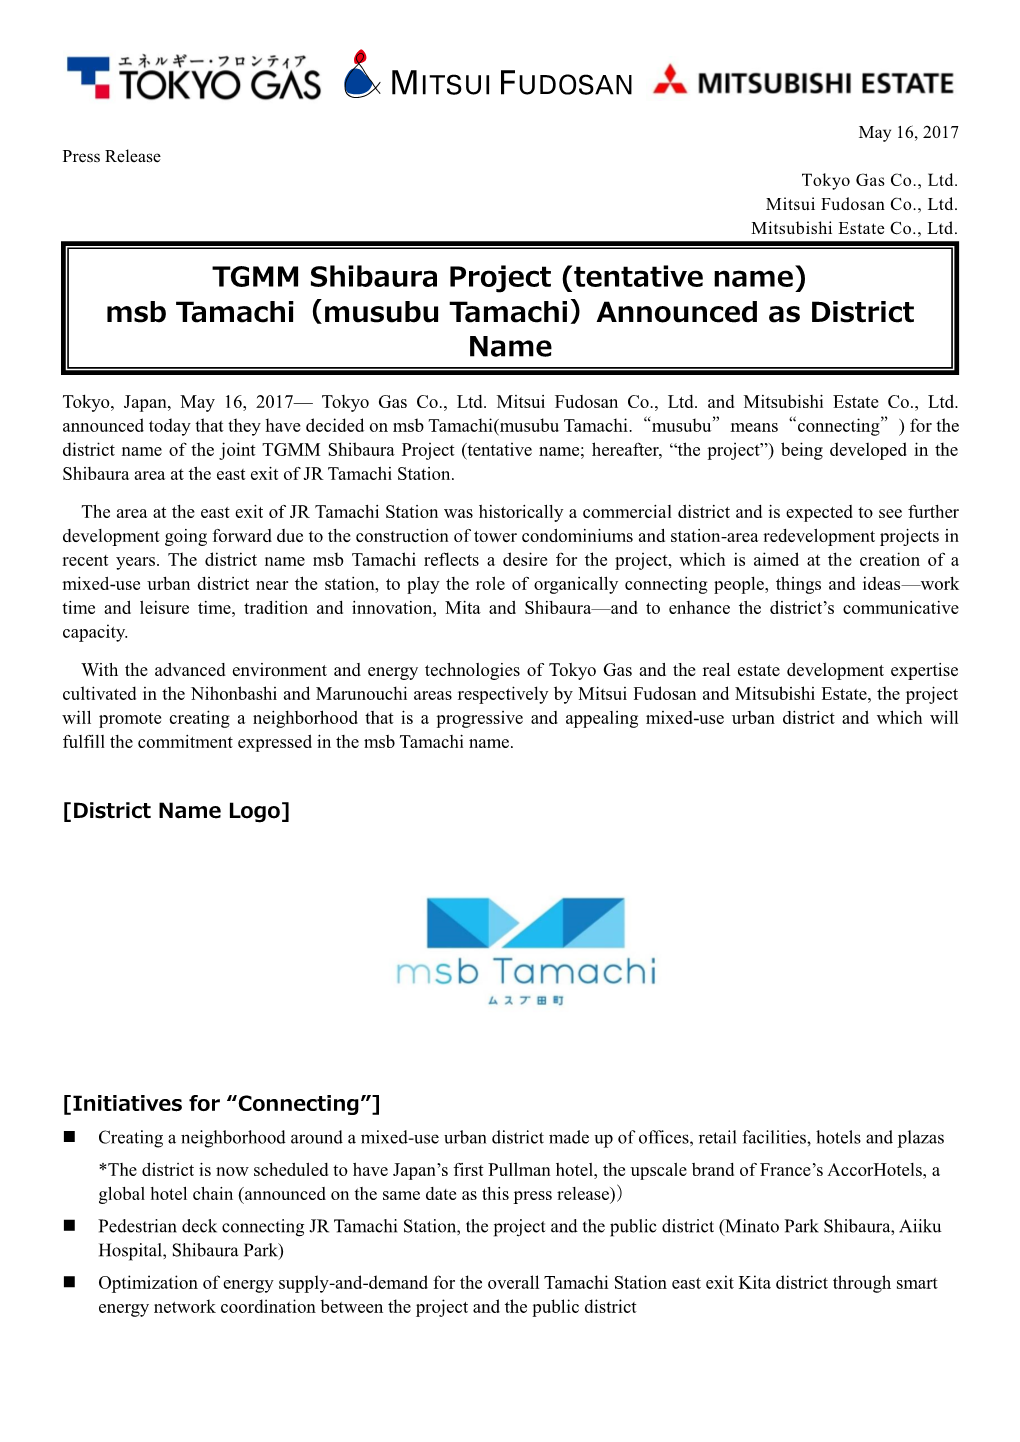 TGMM Shibaura Project (Tentative Name) Msb Tamachi（Musubu Tamachi）Announced As District Name